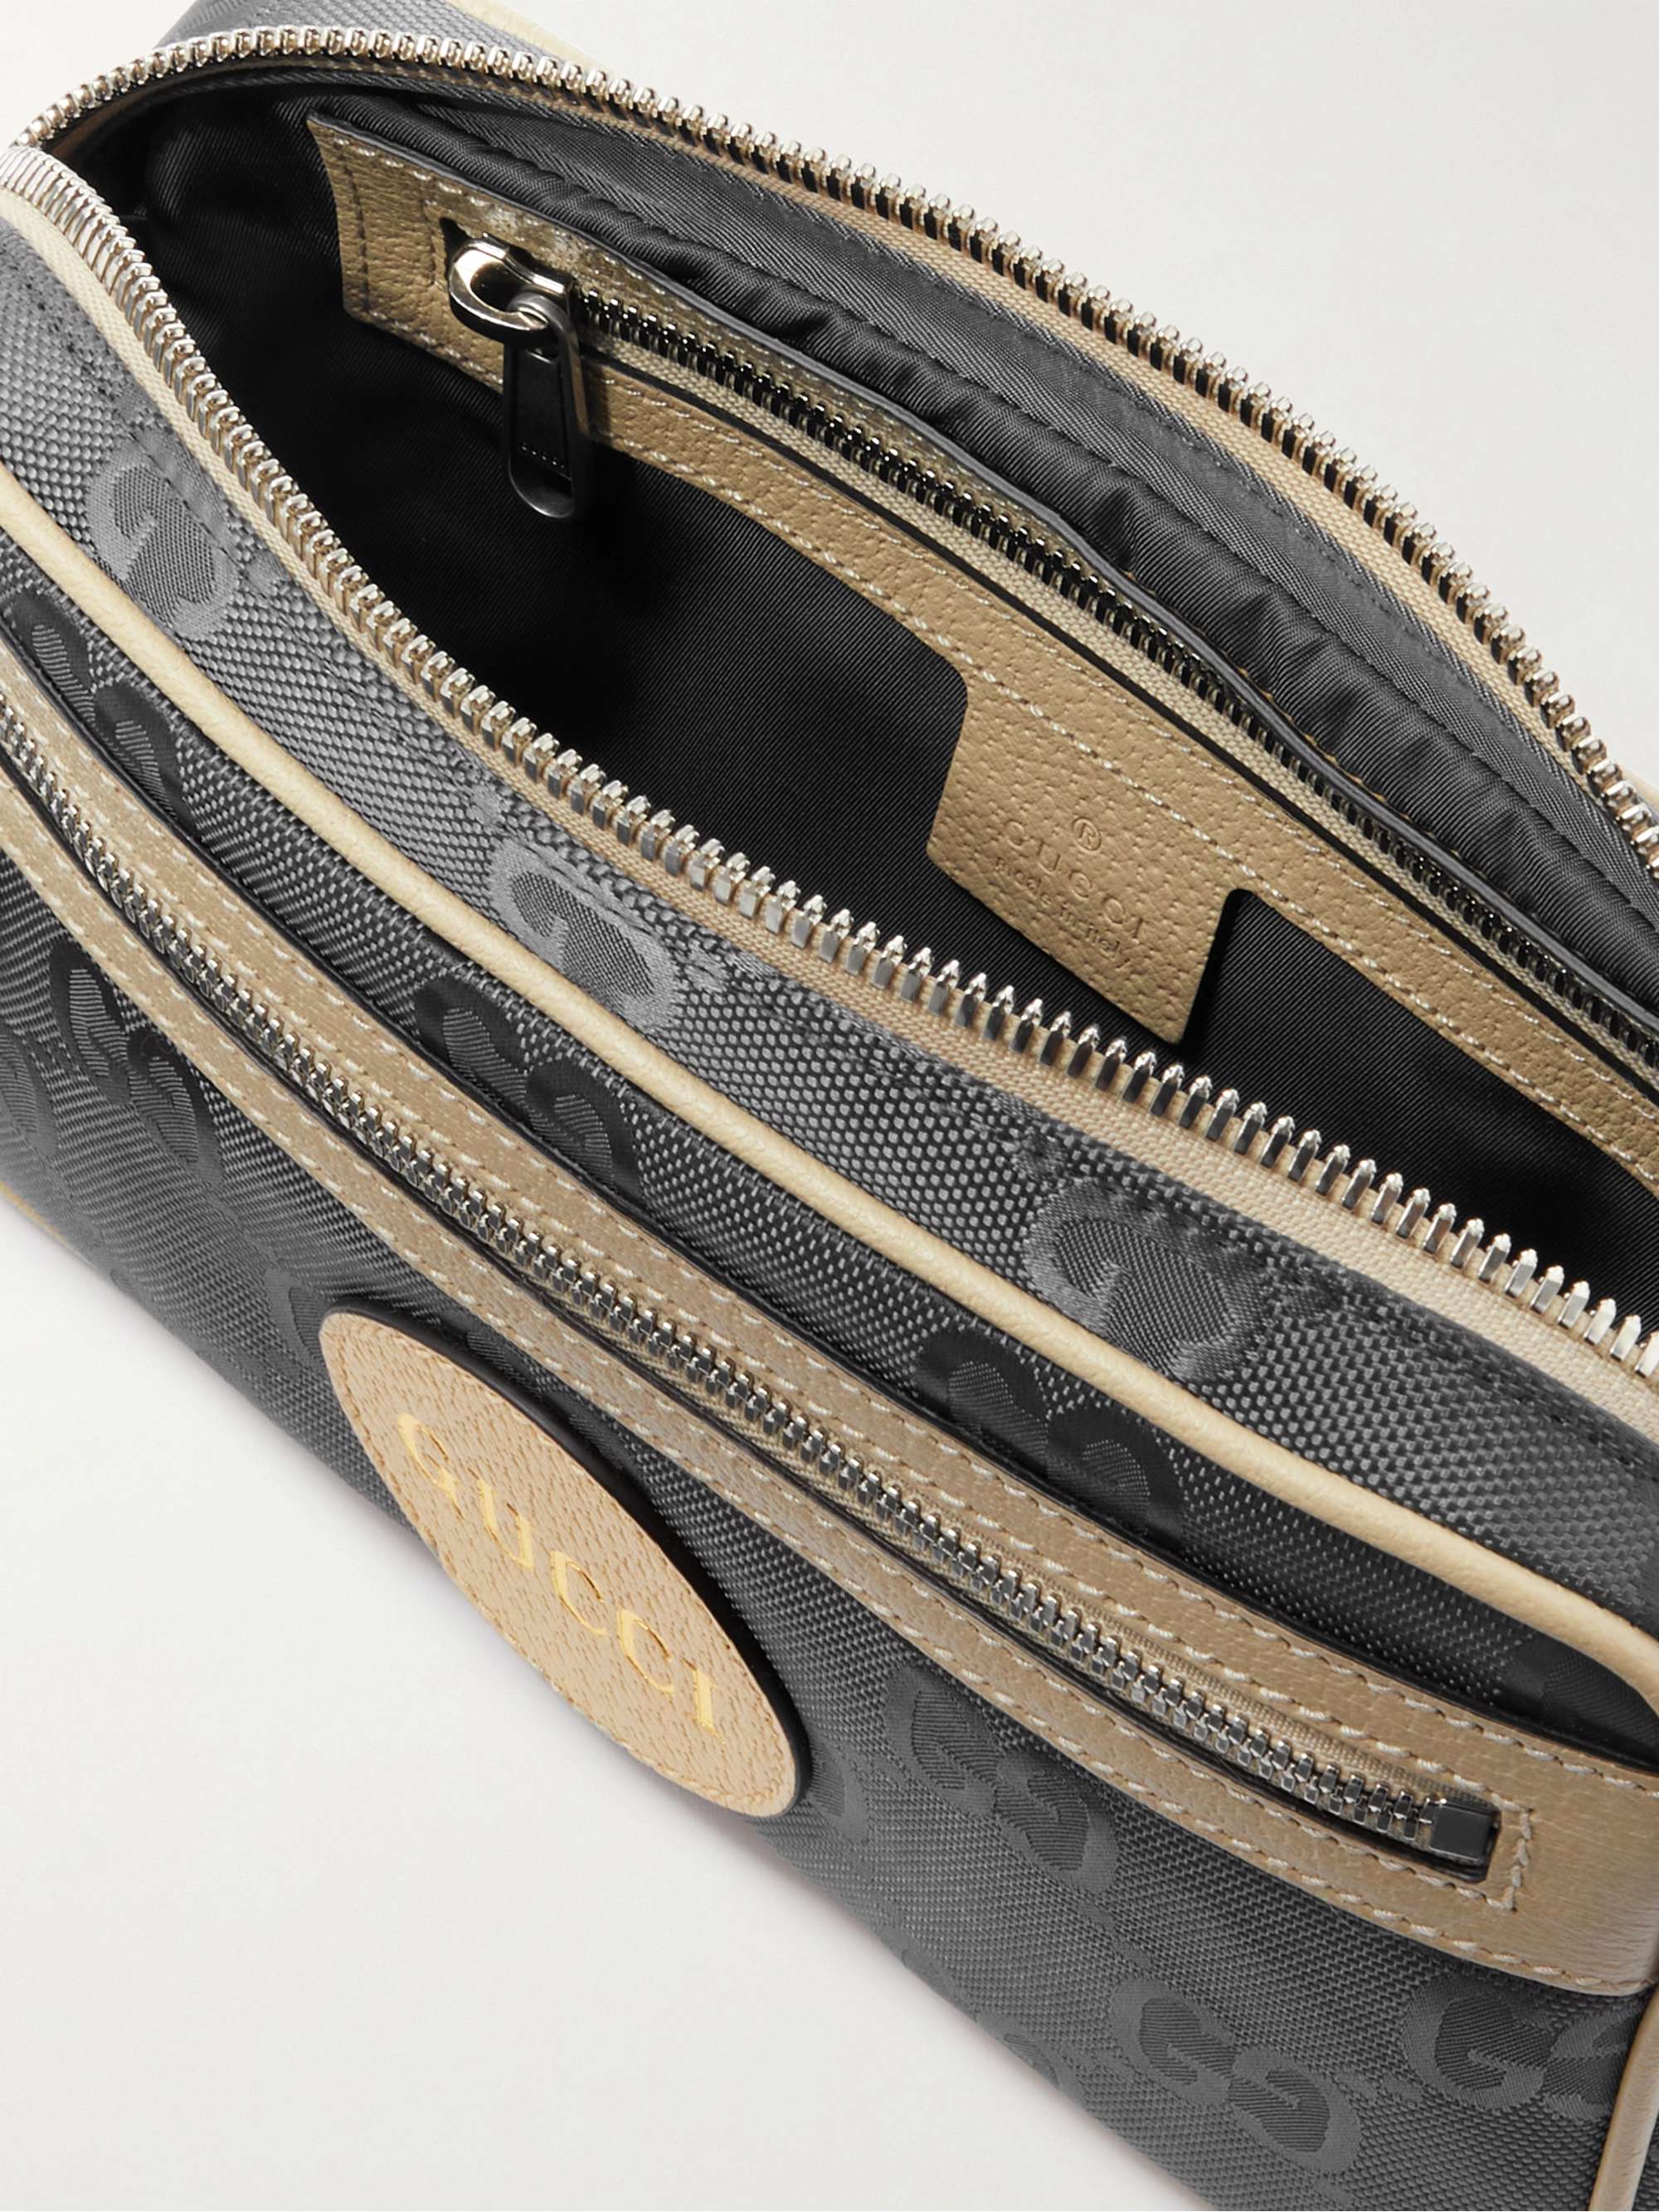 GUCCI Off the Grid Leather-Trimmed Monogrammed ECONYL Canvas Belt Bag